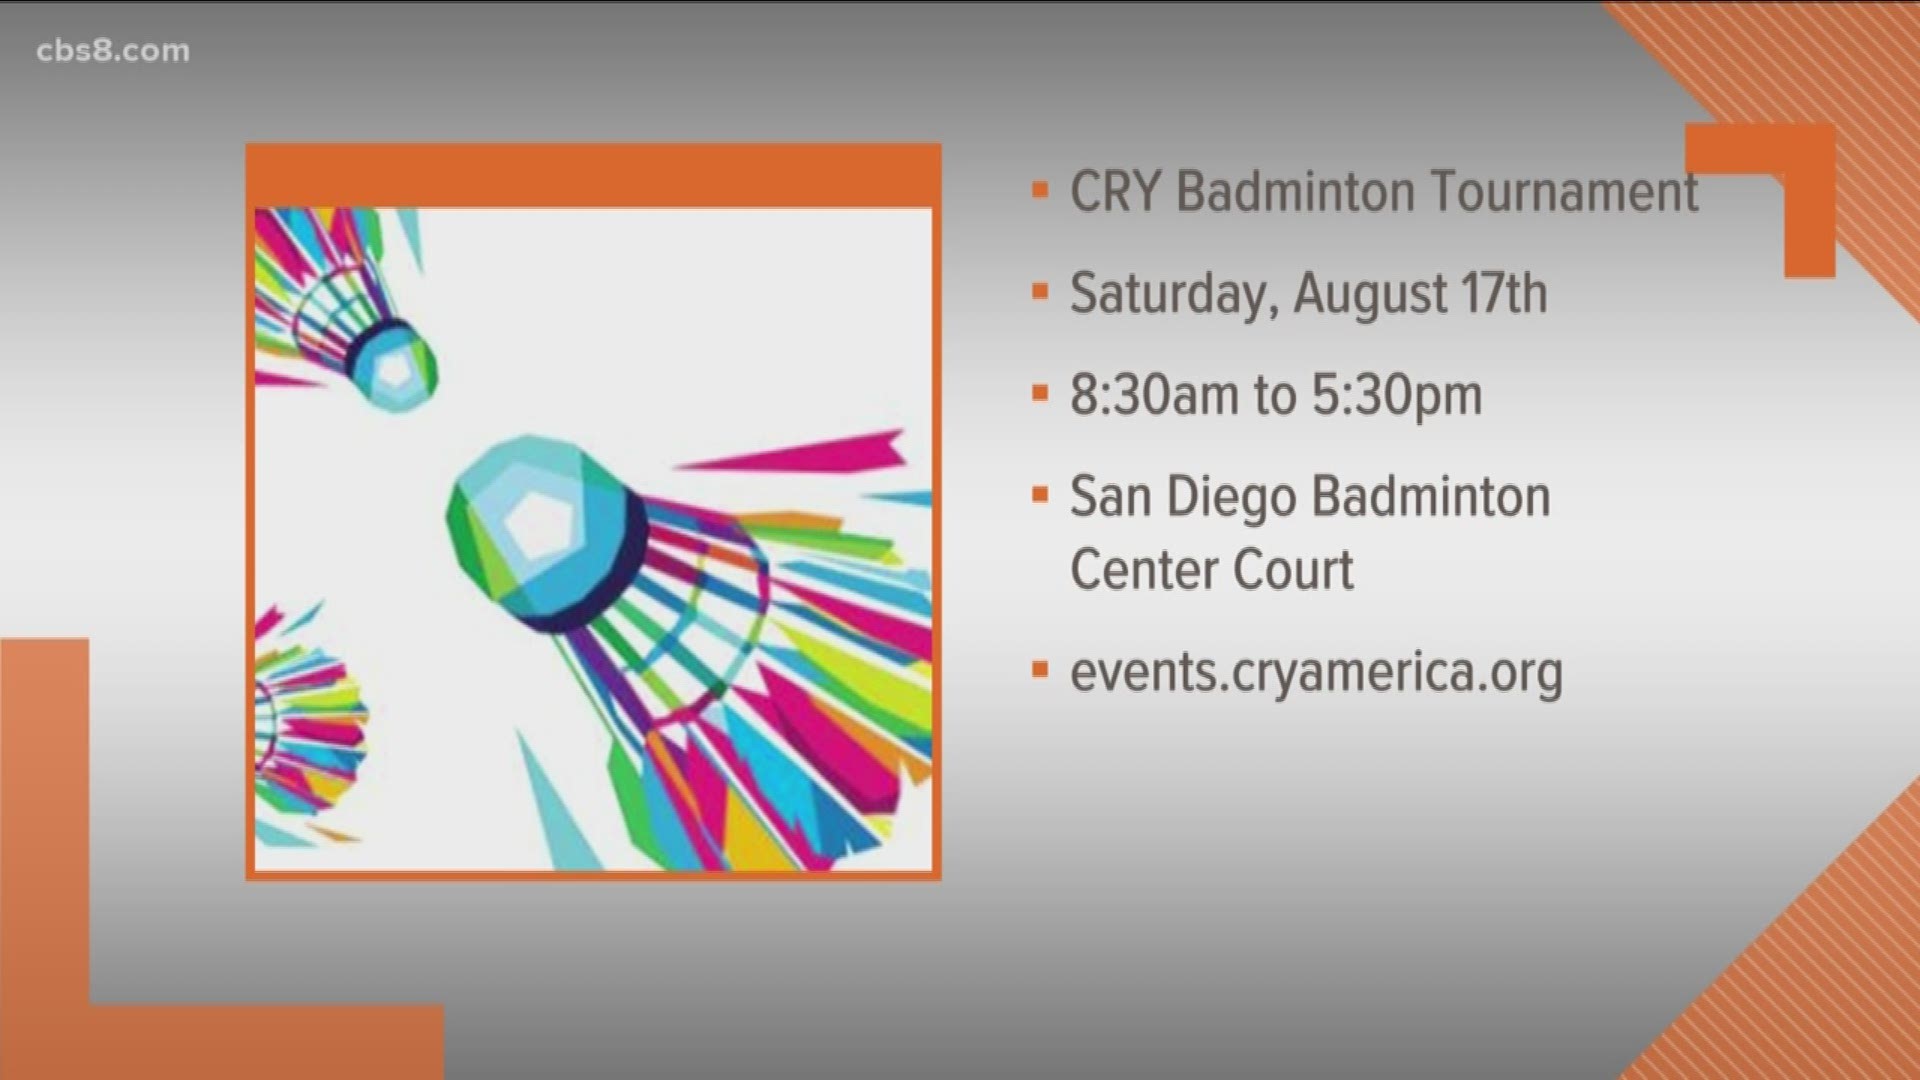 CRY Badminton Tournament provide games to benefit underprivileged children